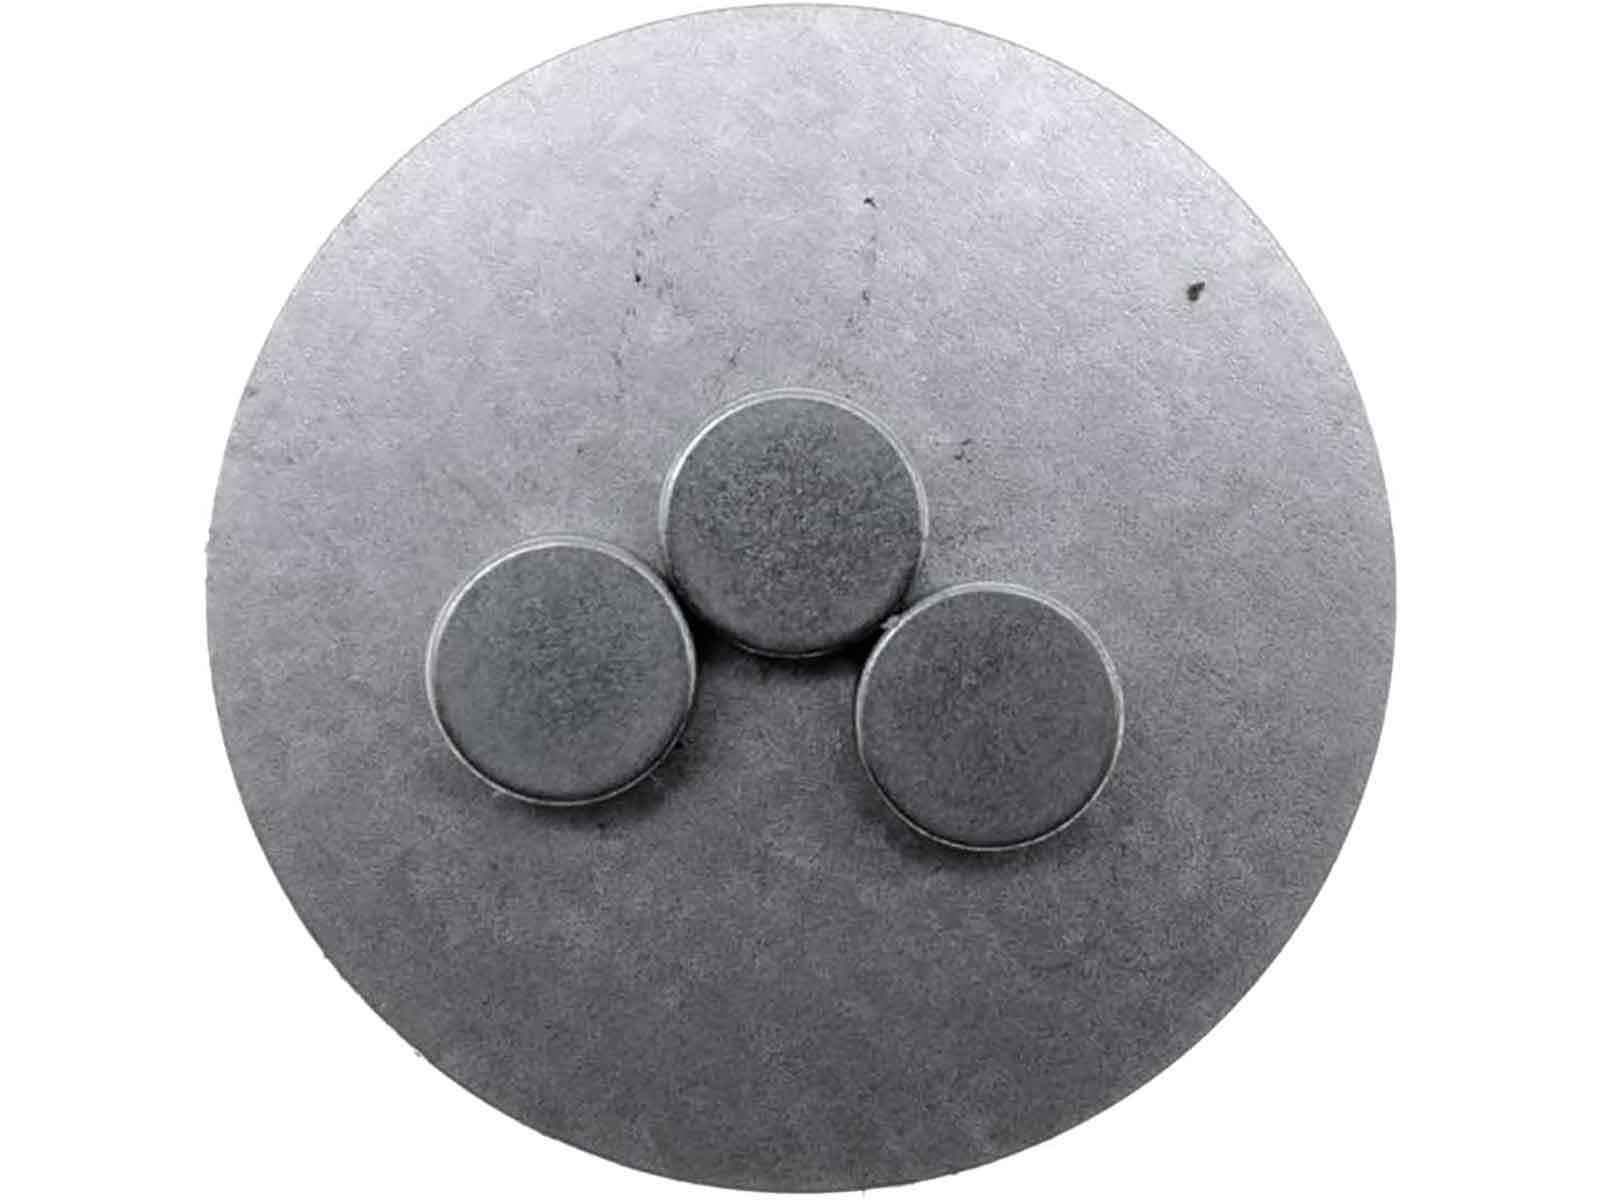 Rare Earth Magnets - 5 pound - 3pc